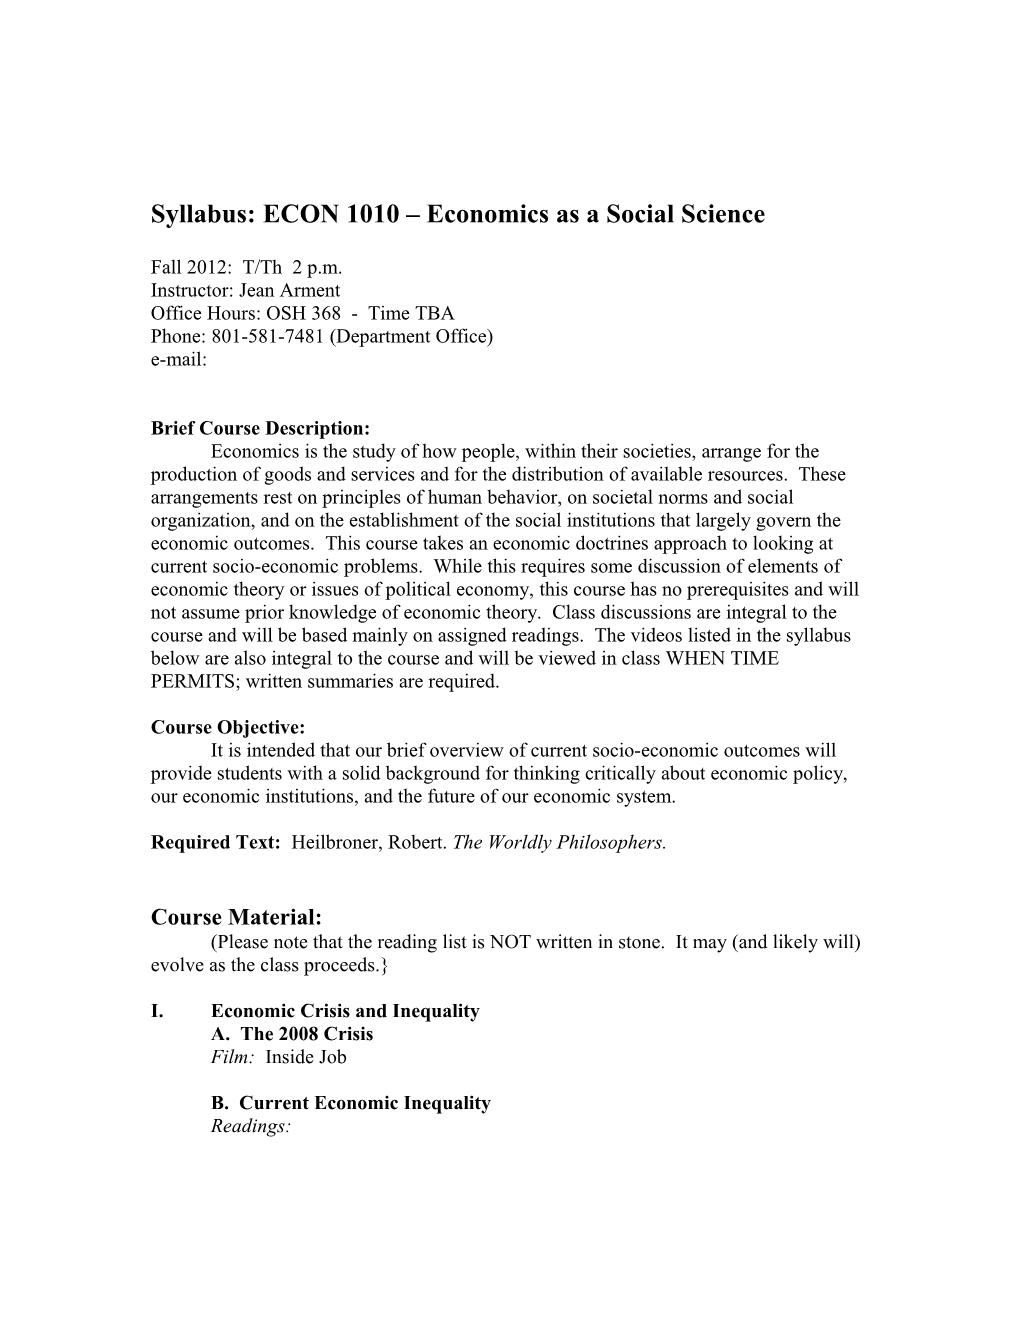 ECON 1010 001: Economics As a Social Science